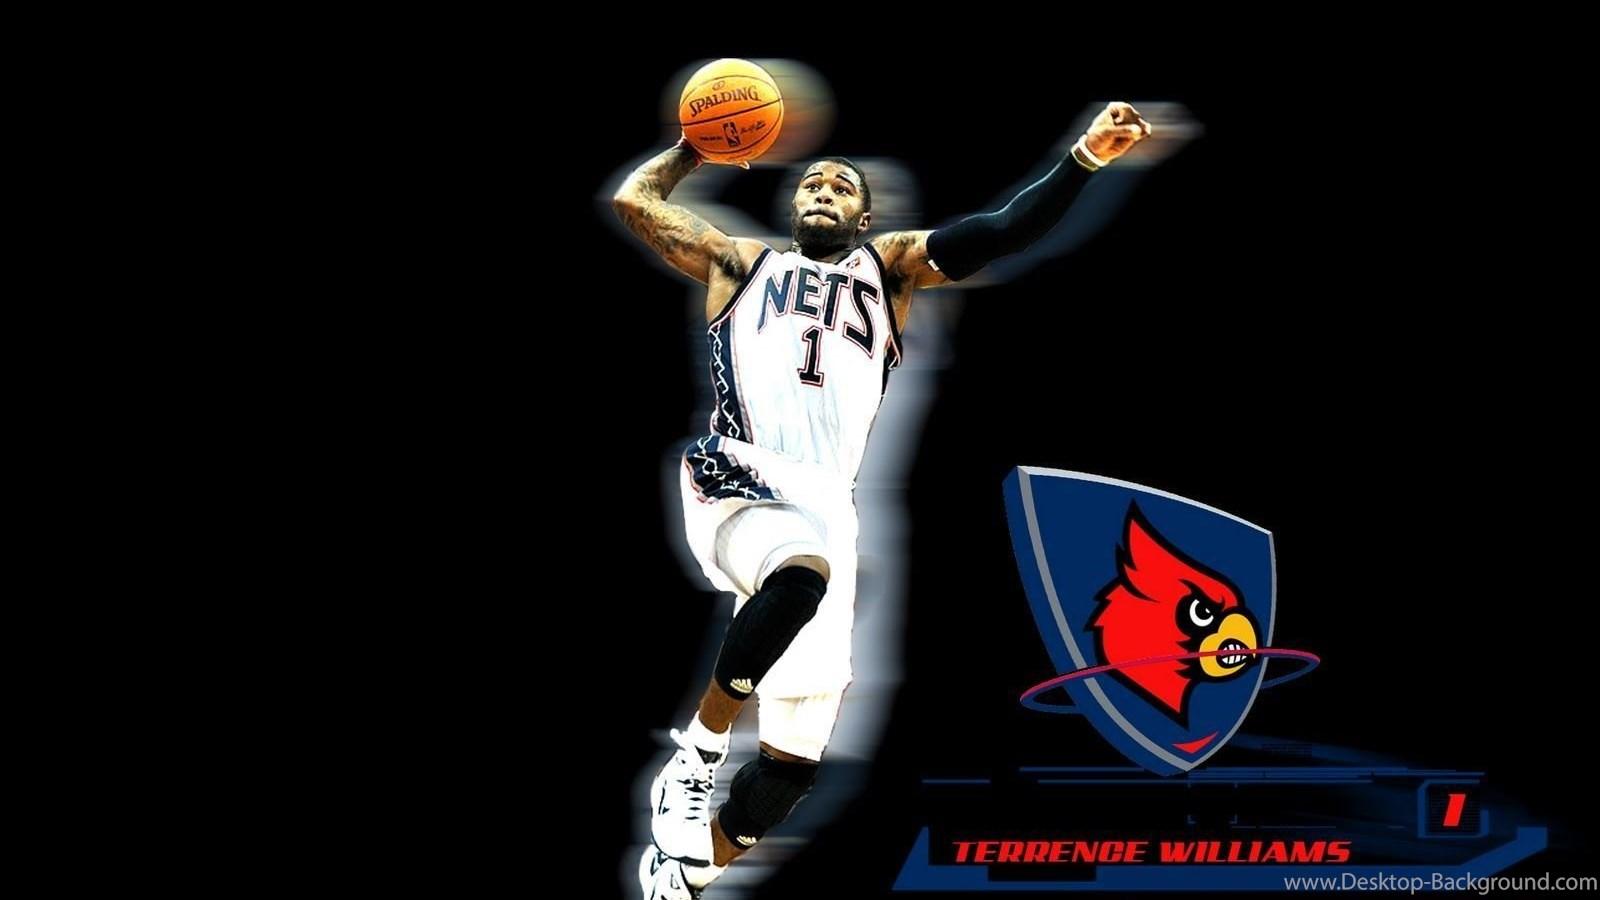 Terrence Williams NBA Basketball Wallpaper Desktop Background